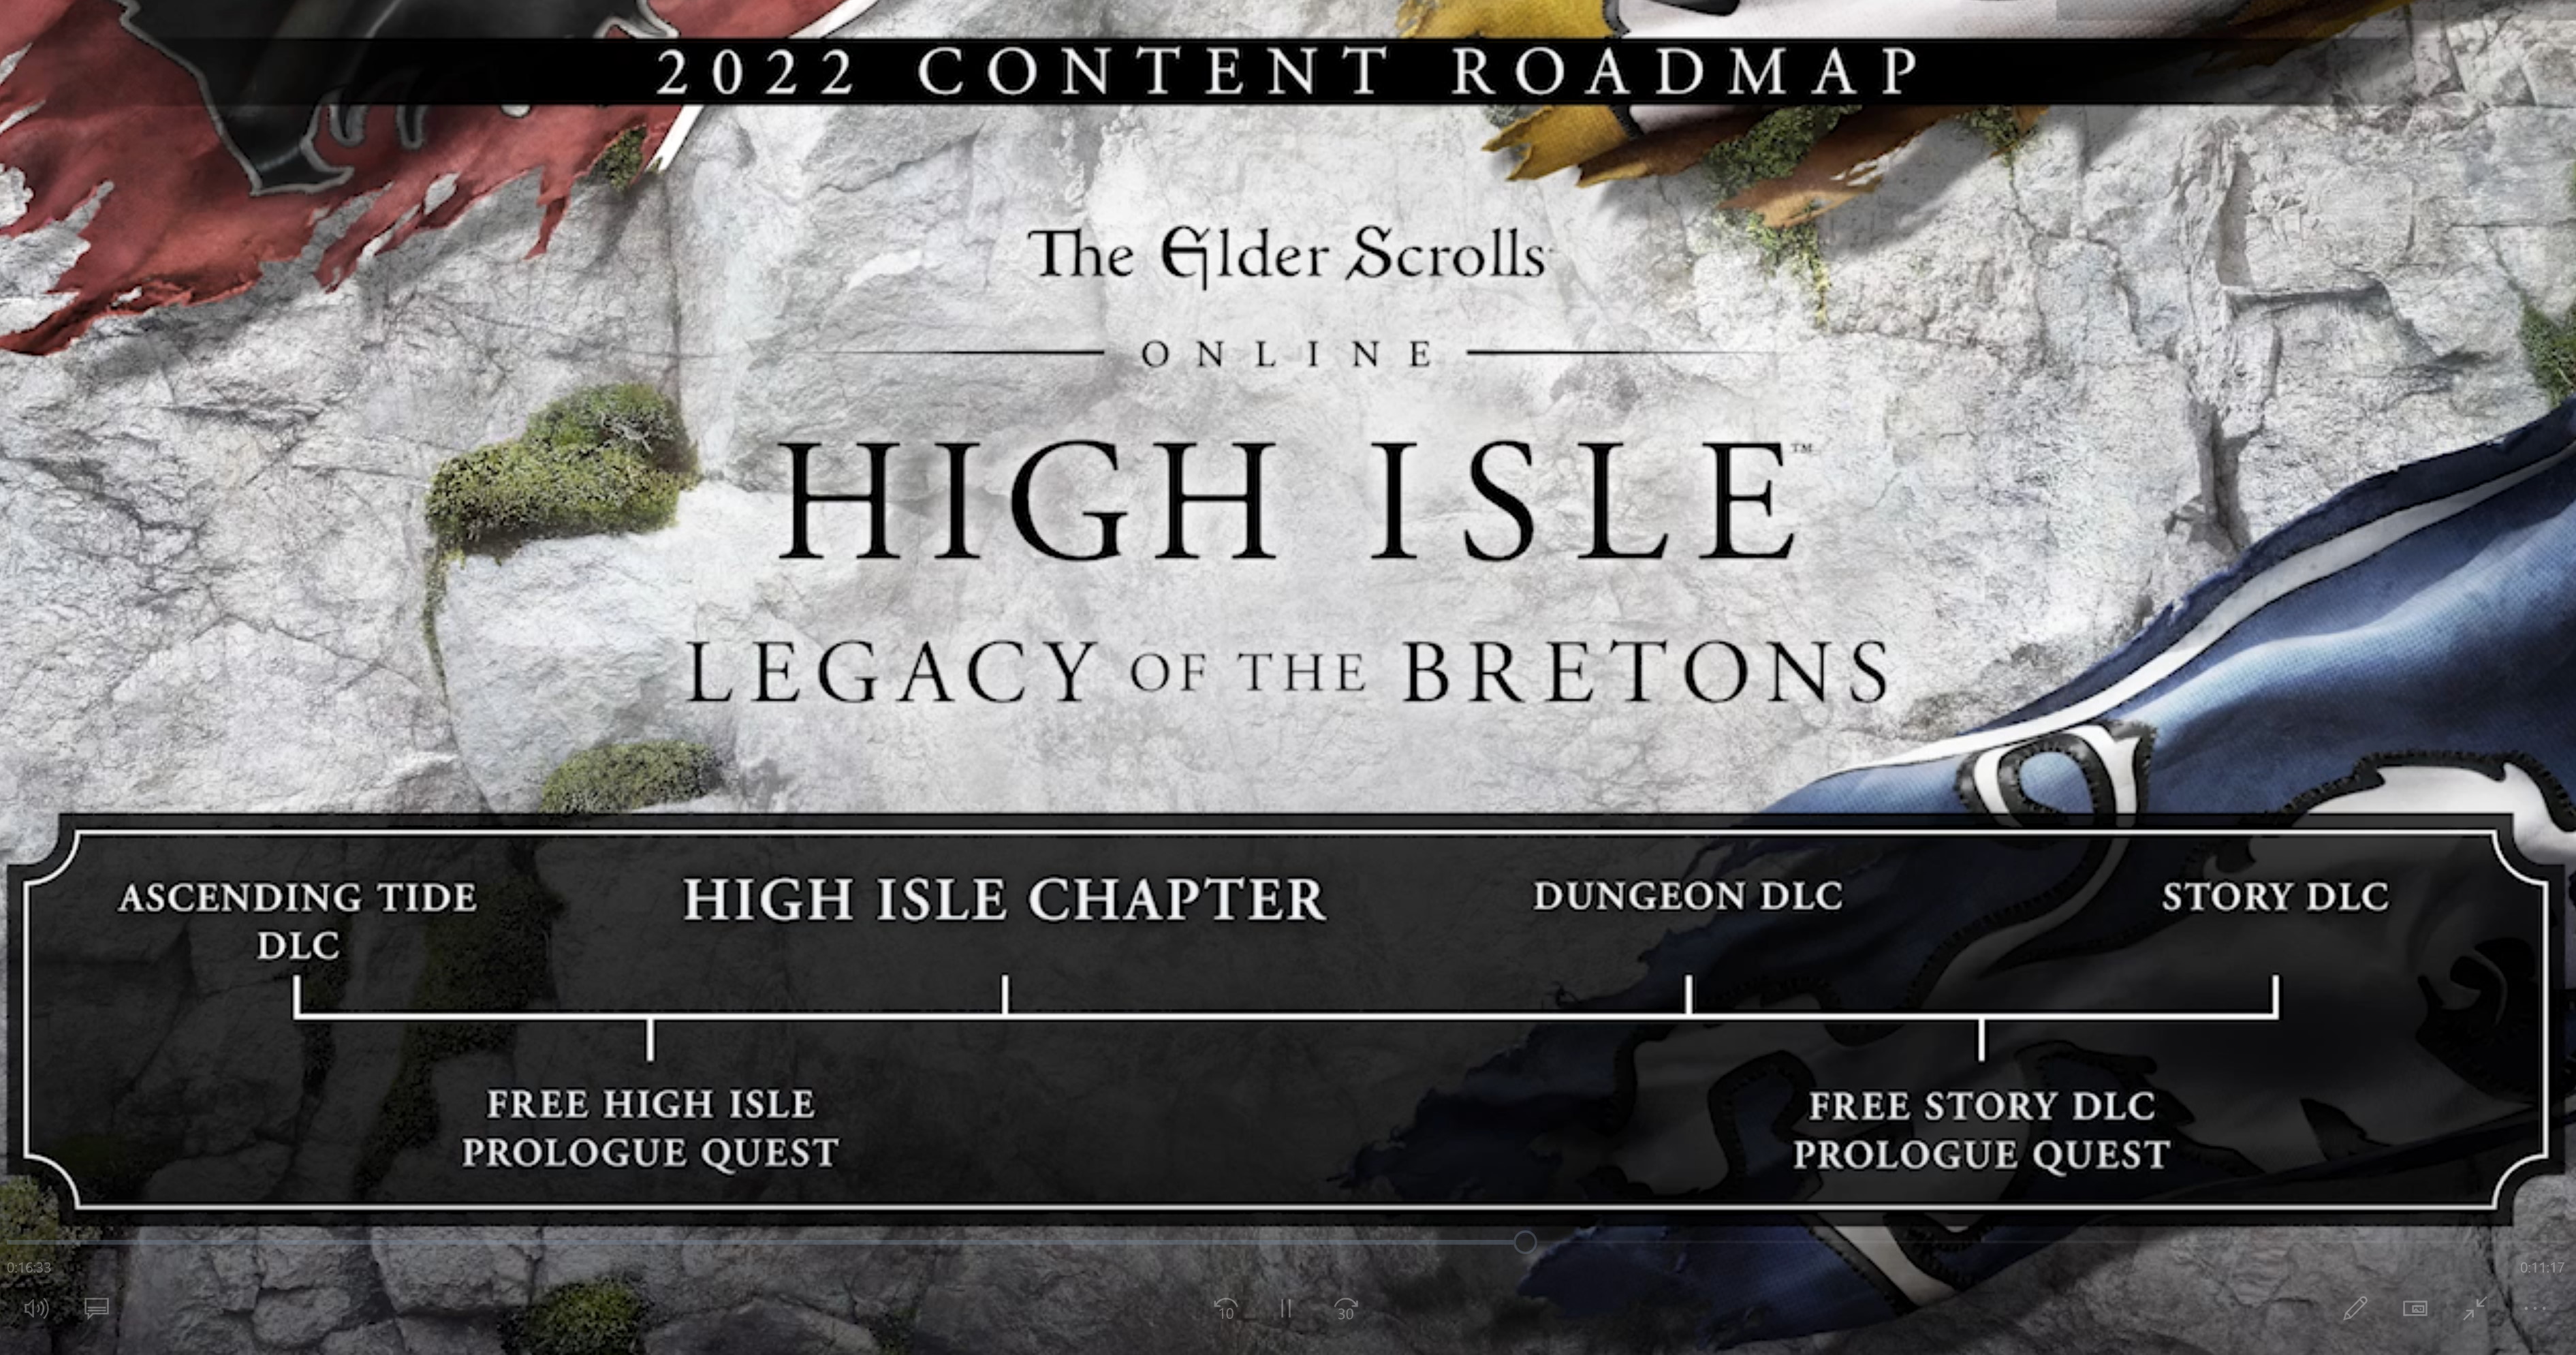 The Elder Scrolls Online: High Isle content roadmap